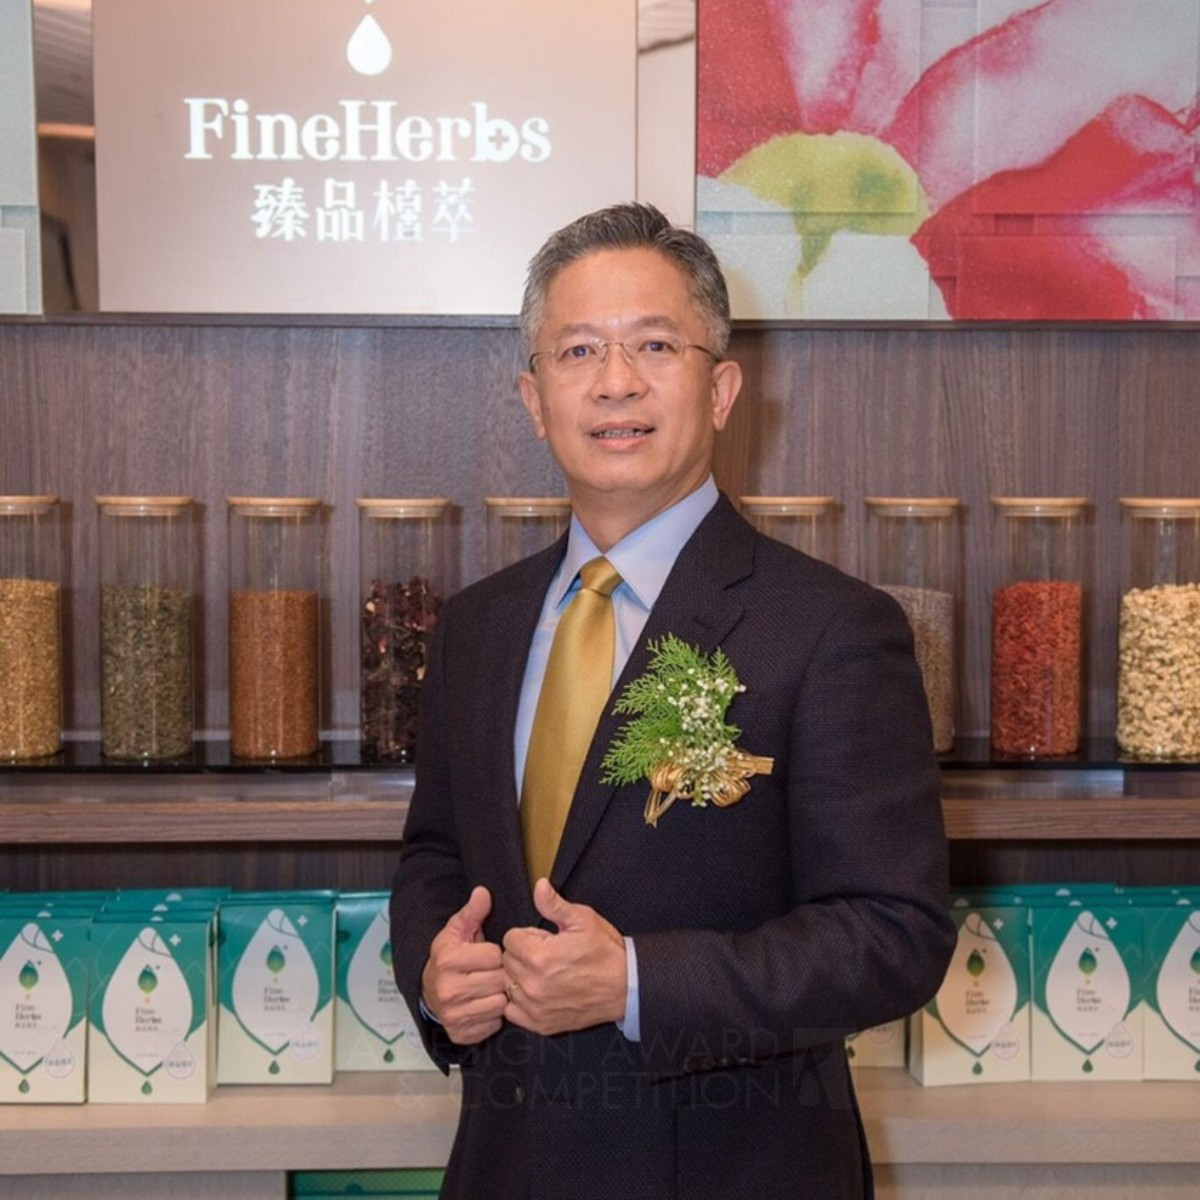 Fineherbsoap Co., Ltd & Yung-Li Chen